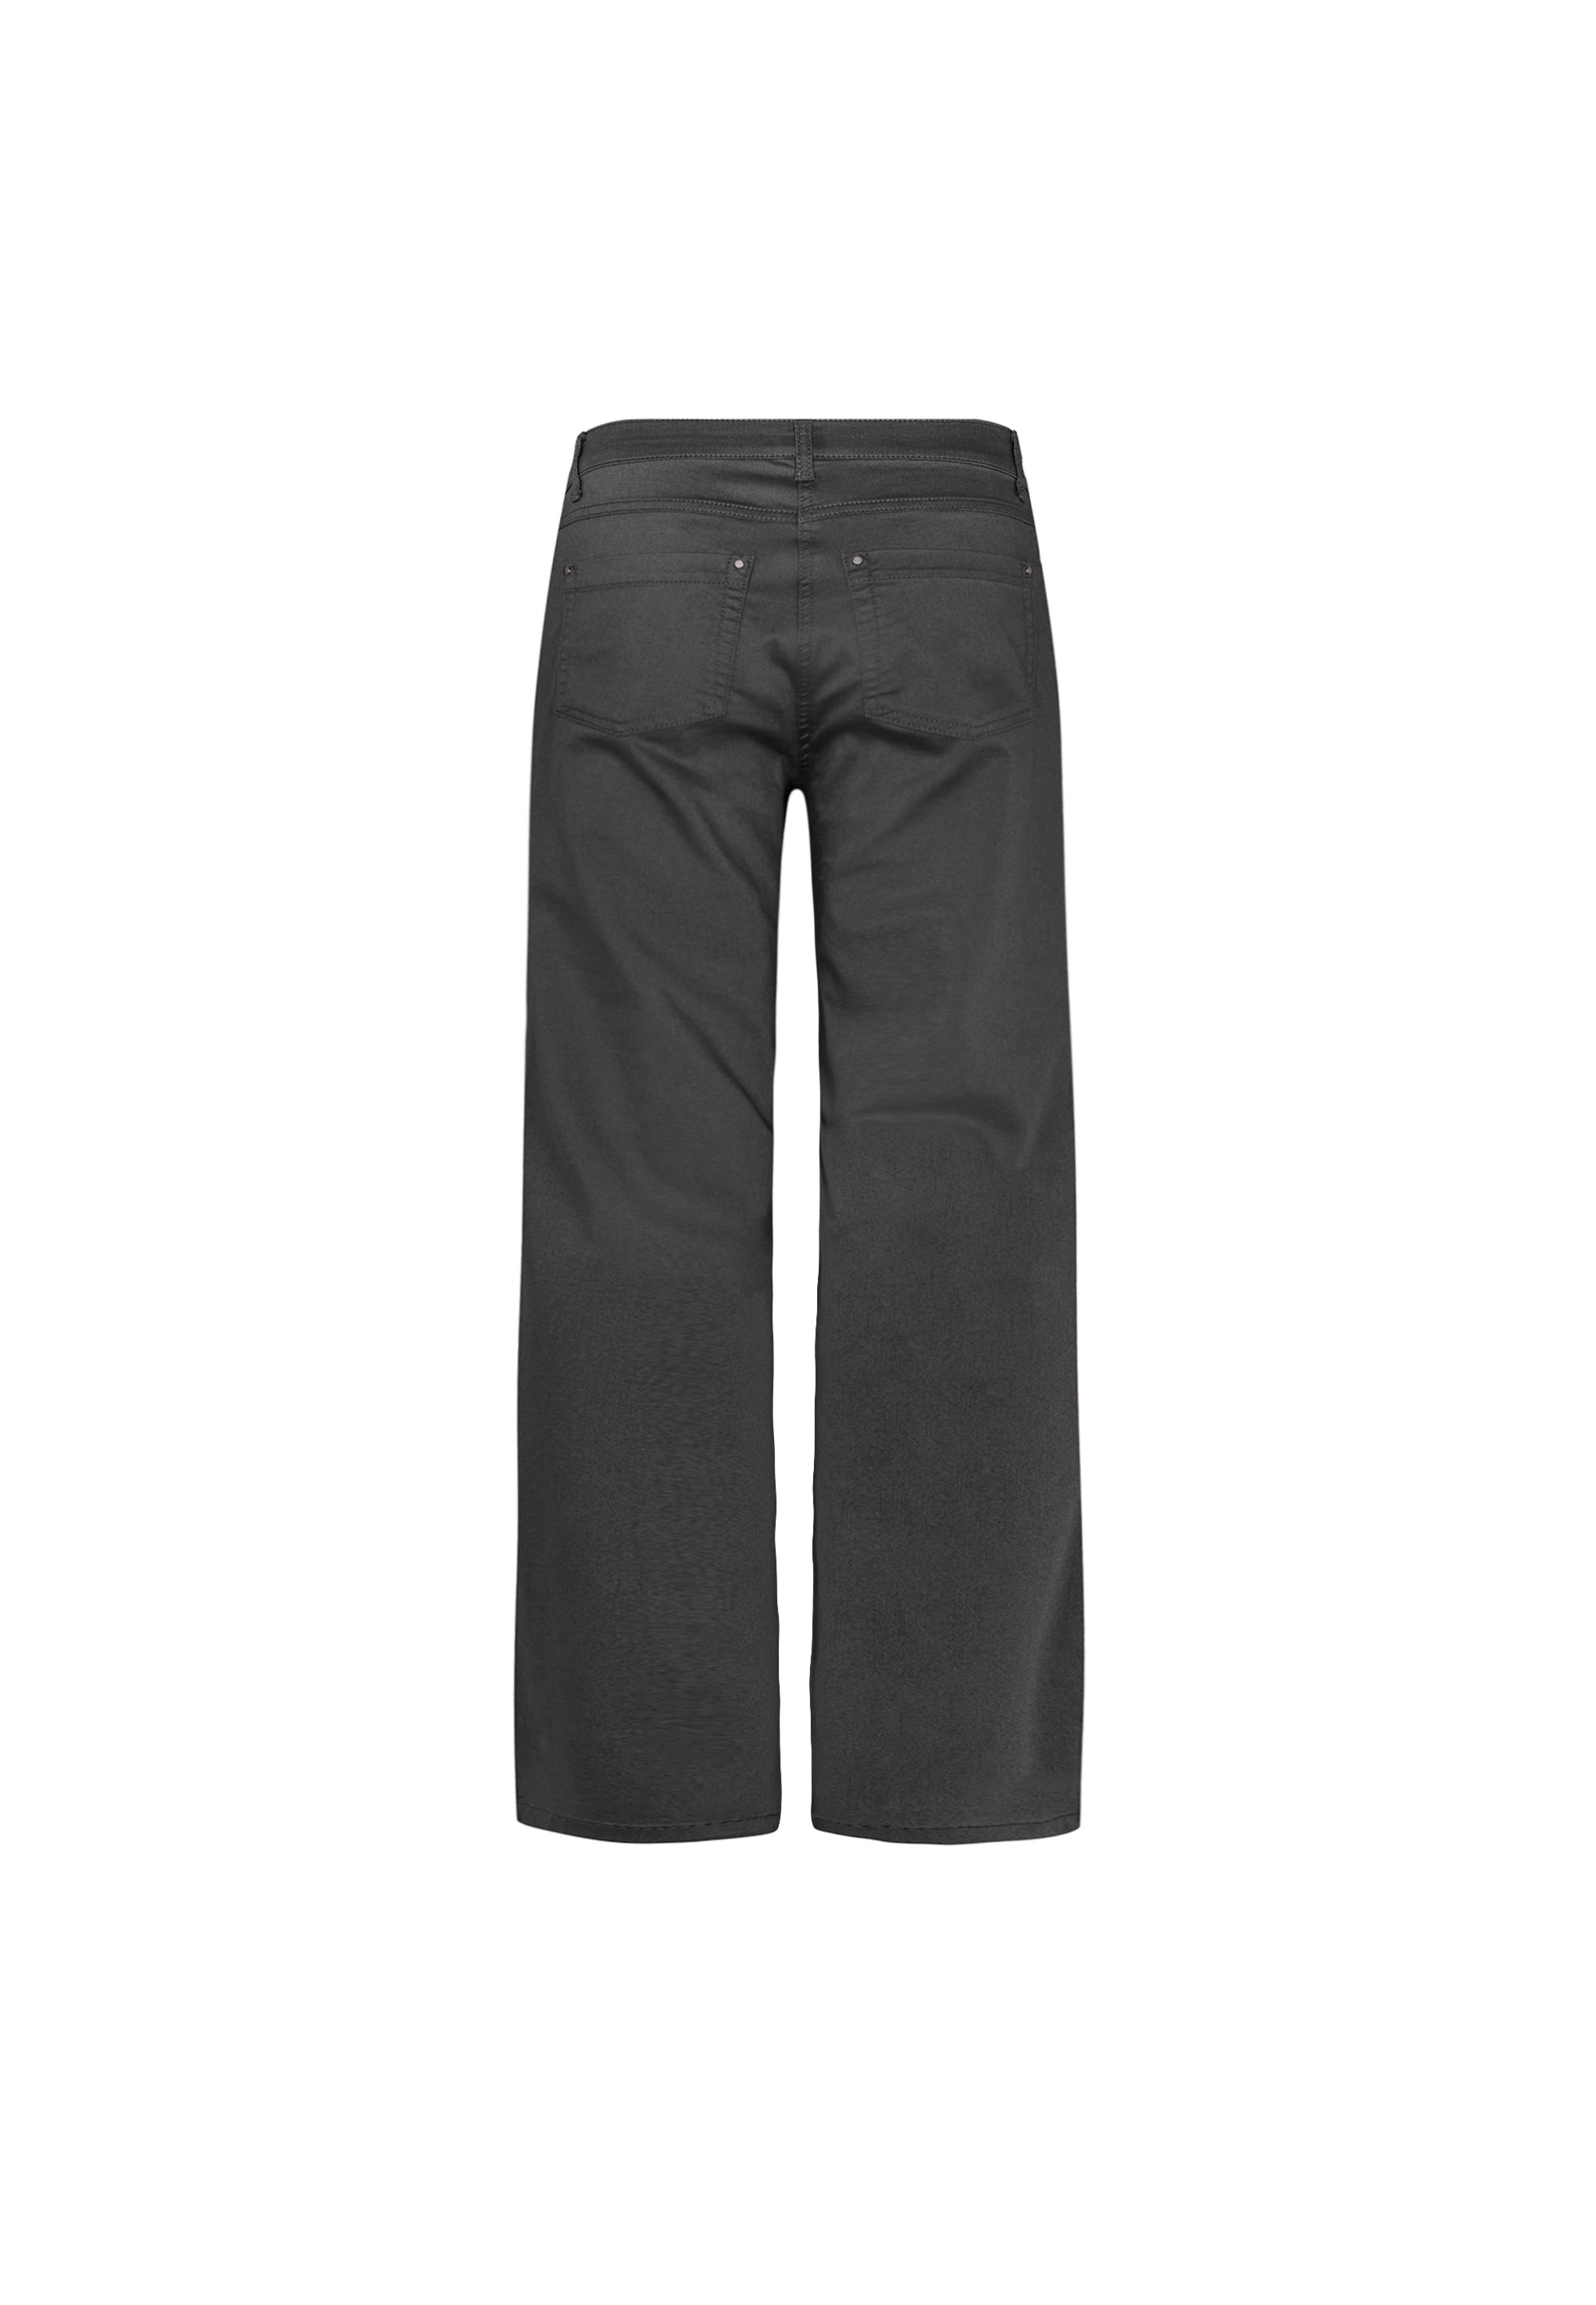 LAURIE Carol Loose - Medium Length Trousers LOOSE 99000 Black